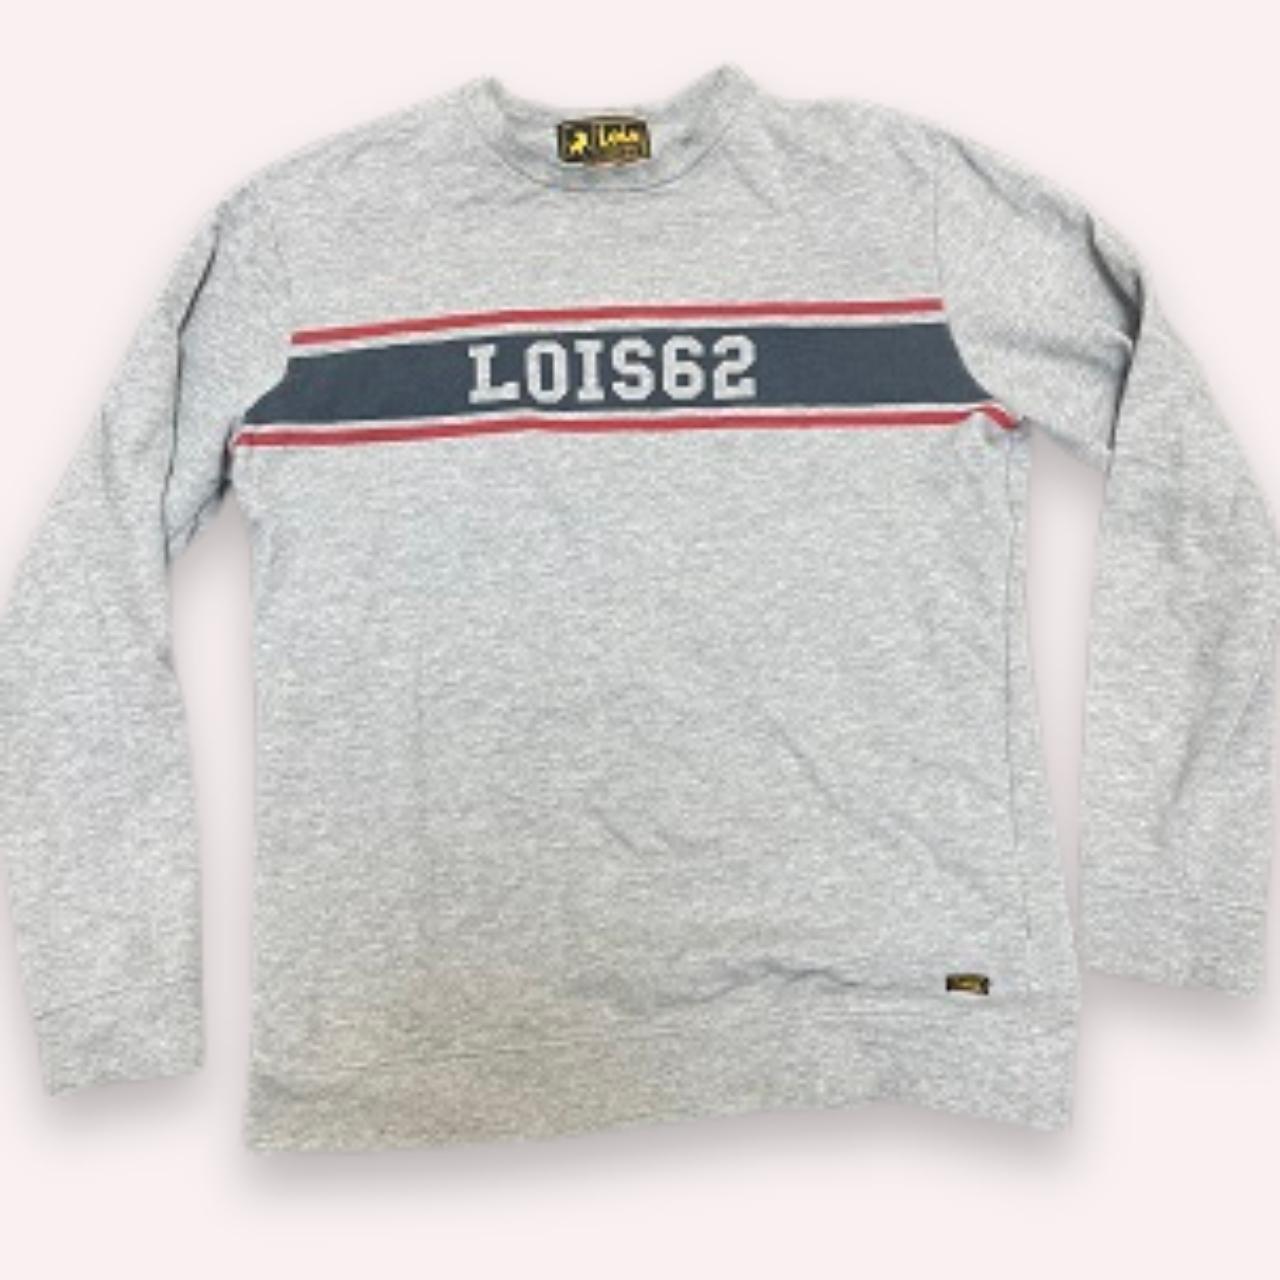 Vintage Lois Lois62 print grey mens sweatshirt size S